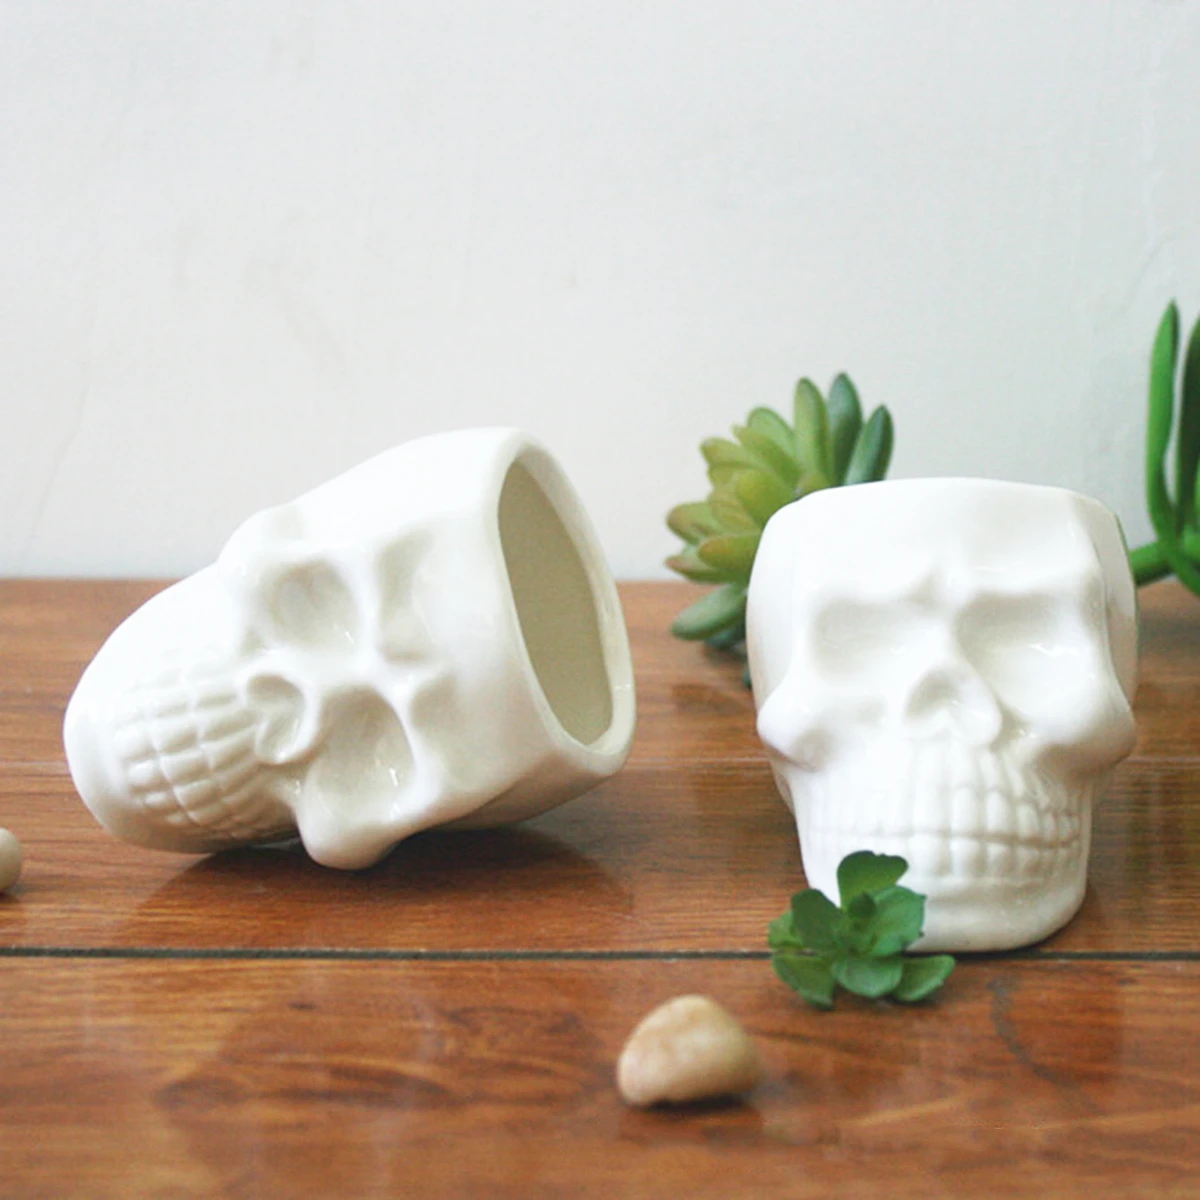 White Ceramic Cool Skull Capita Plant Potted Small Flower Pot Planter Succulent`